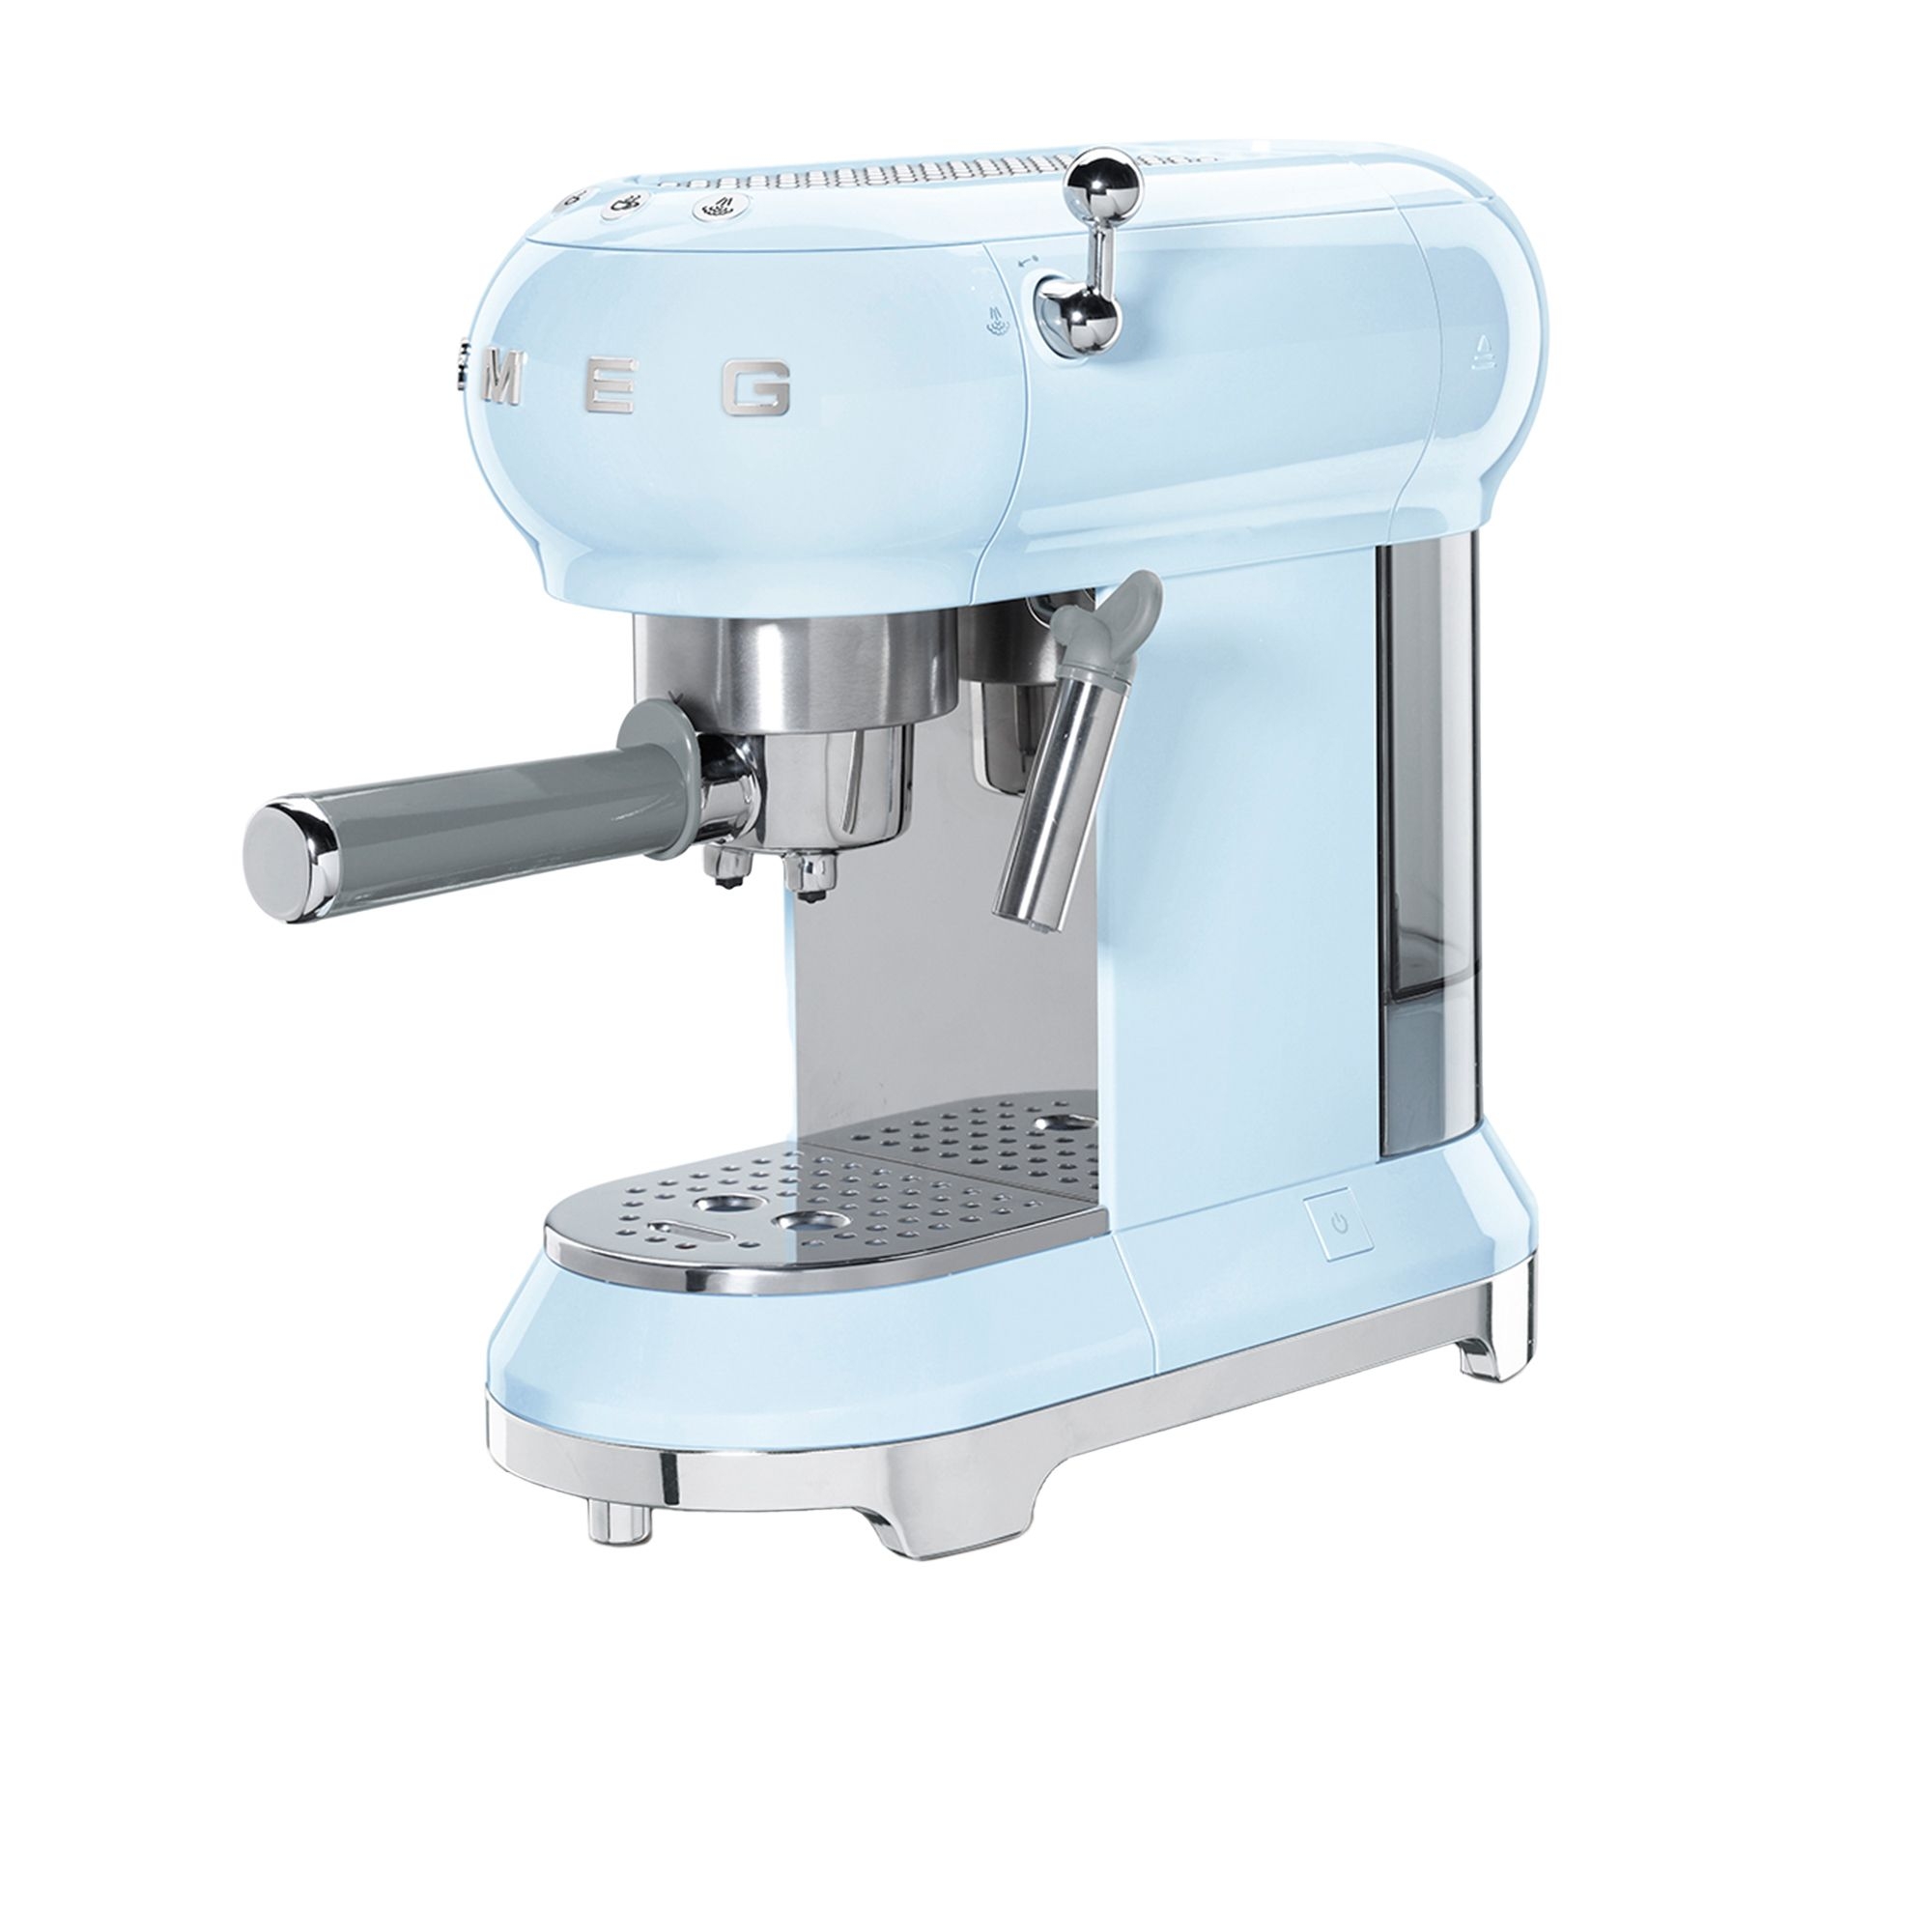 Smeg 50's Retro Style Espresso Coffee Machine Pastel Blue Image 2